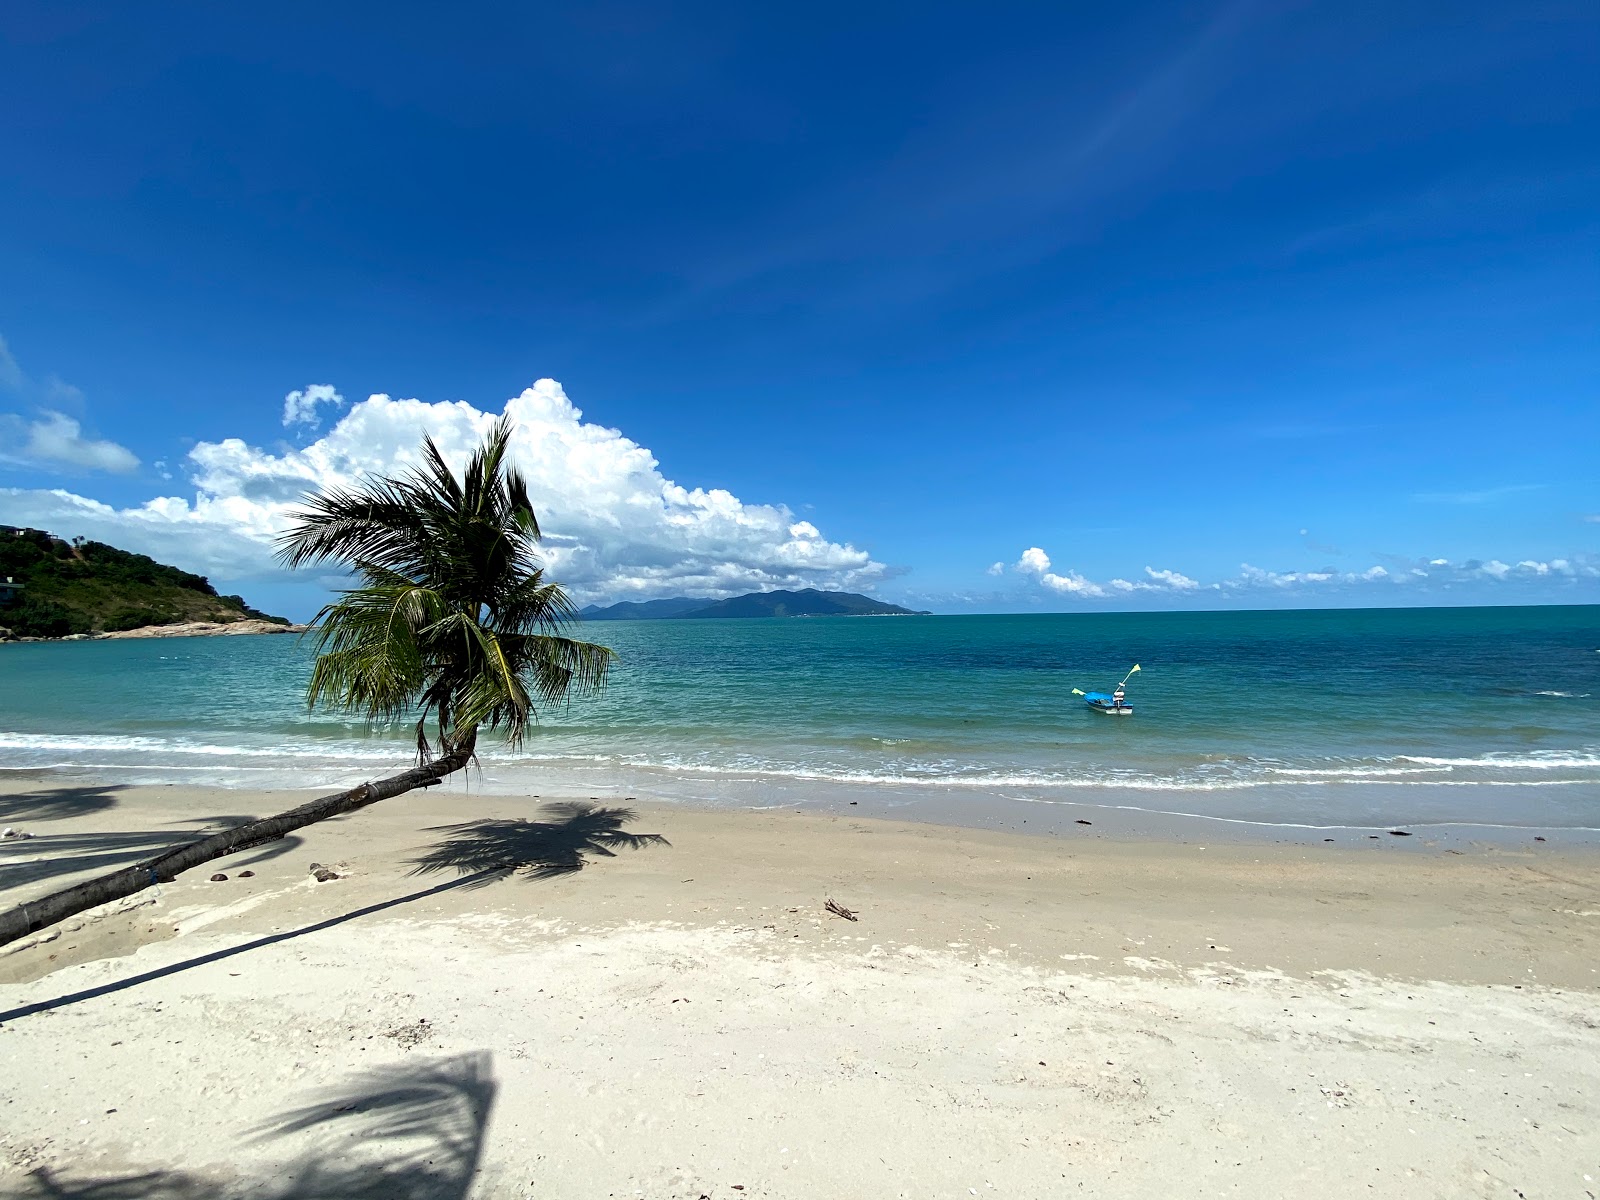 Foto de Thongson Bay beach - lugar popular entre os apreciadores de relaxamento